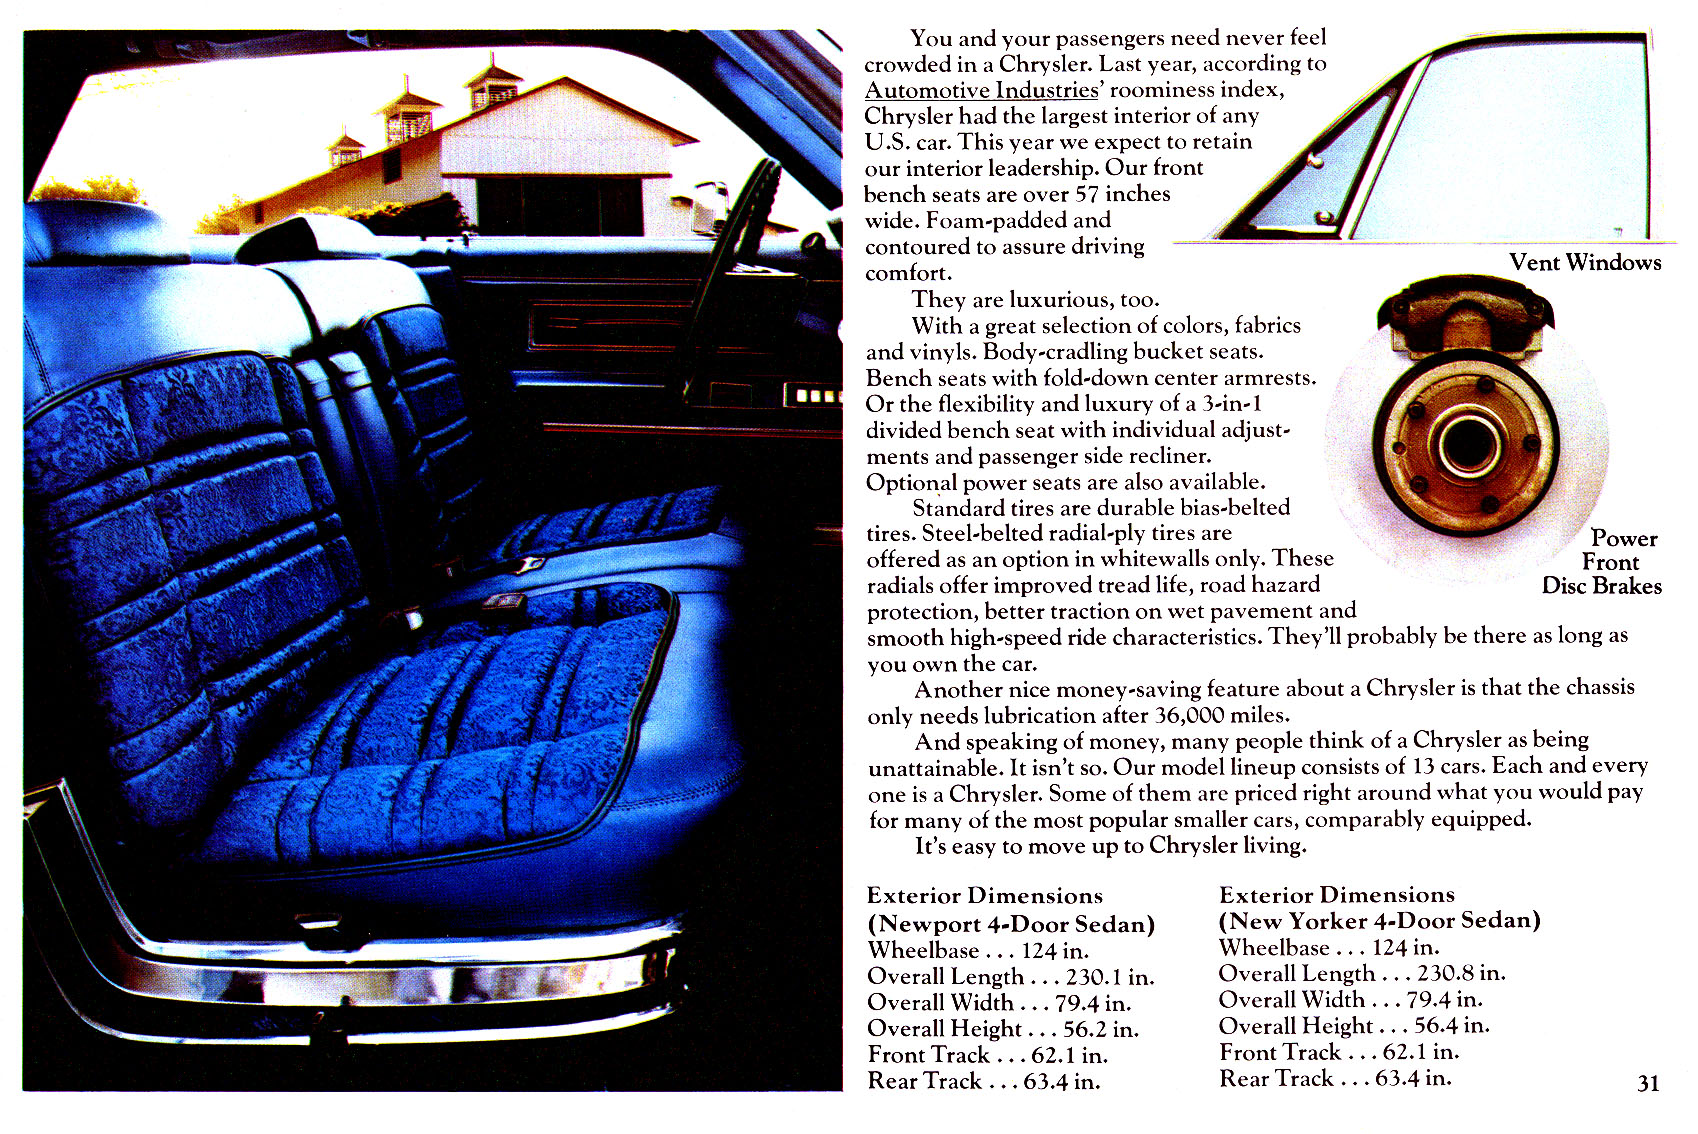 1973_Chrysler-Plymouth_Brochure-31